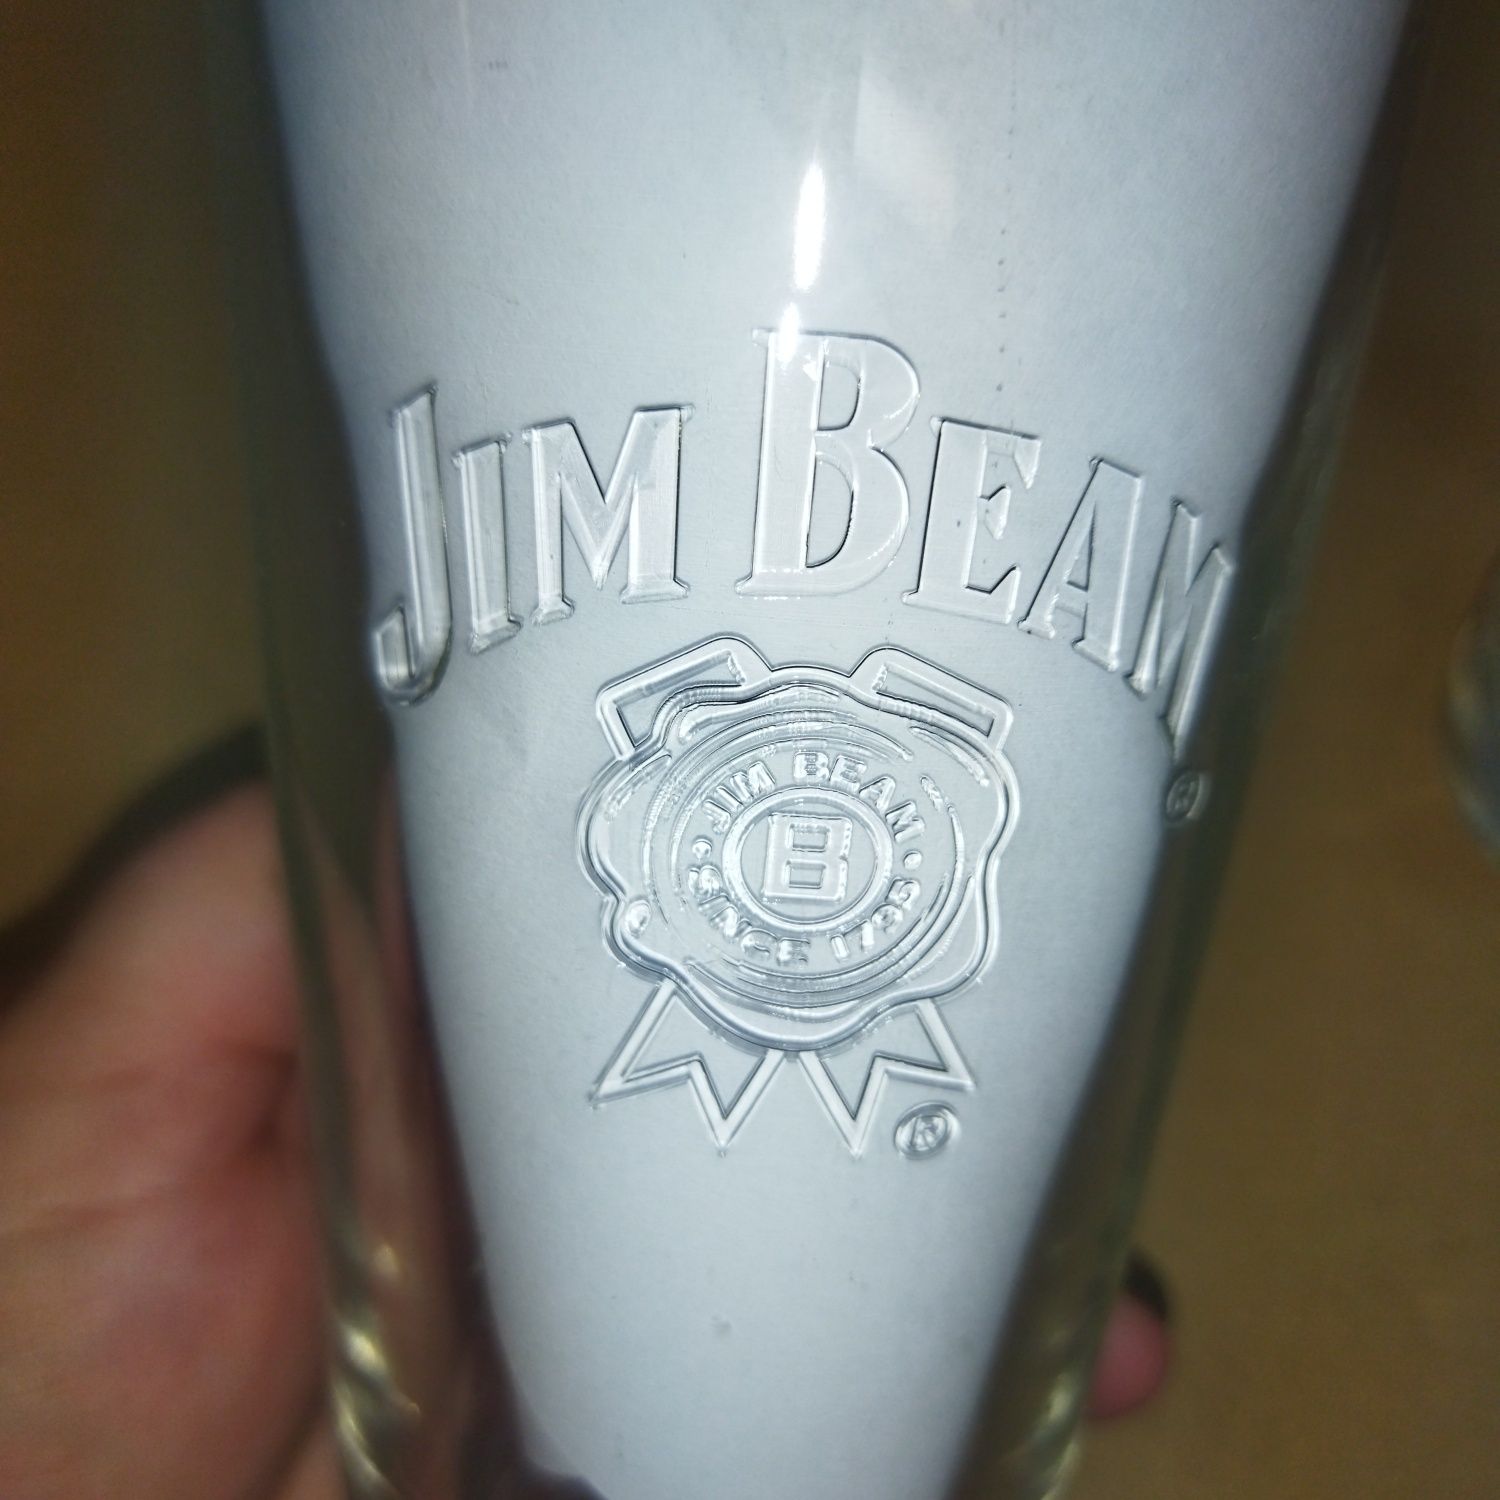 Longi 4 szt z logo Jeam Beam.